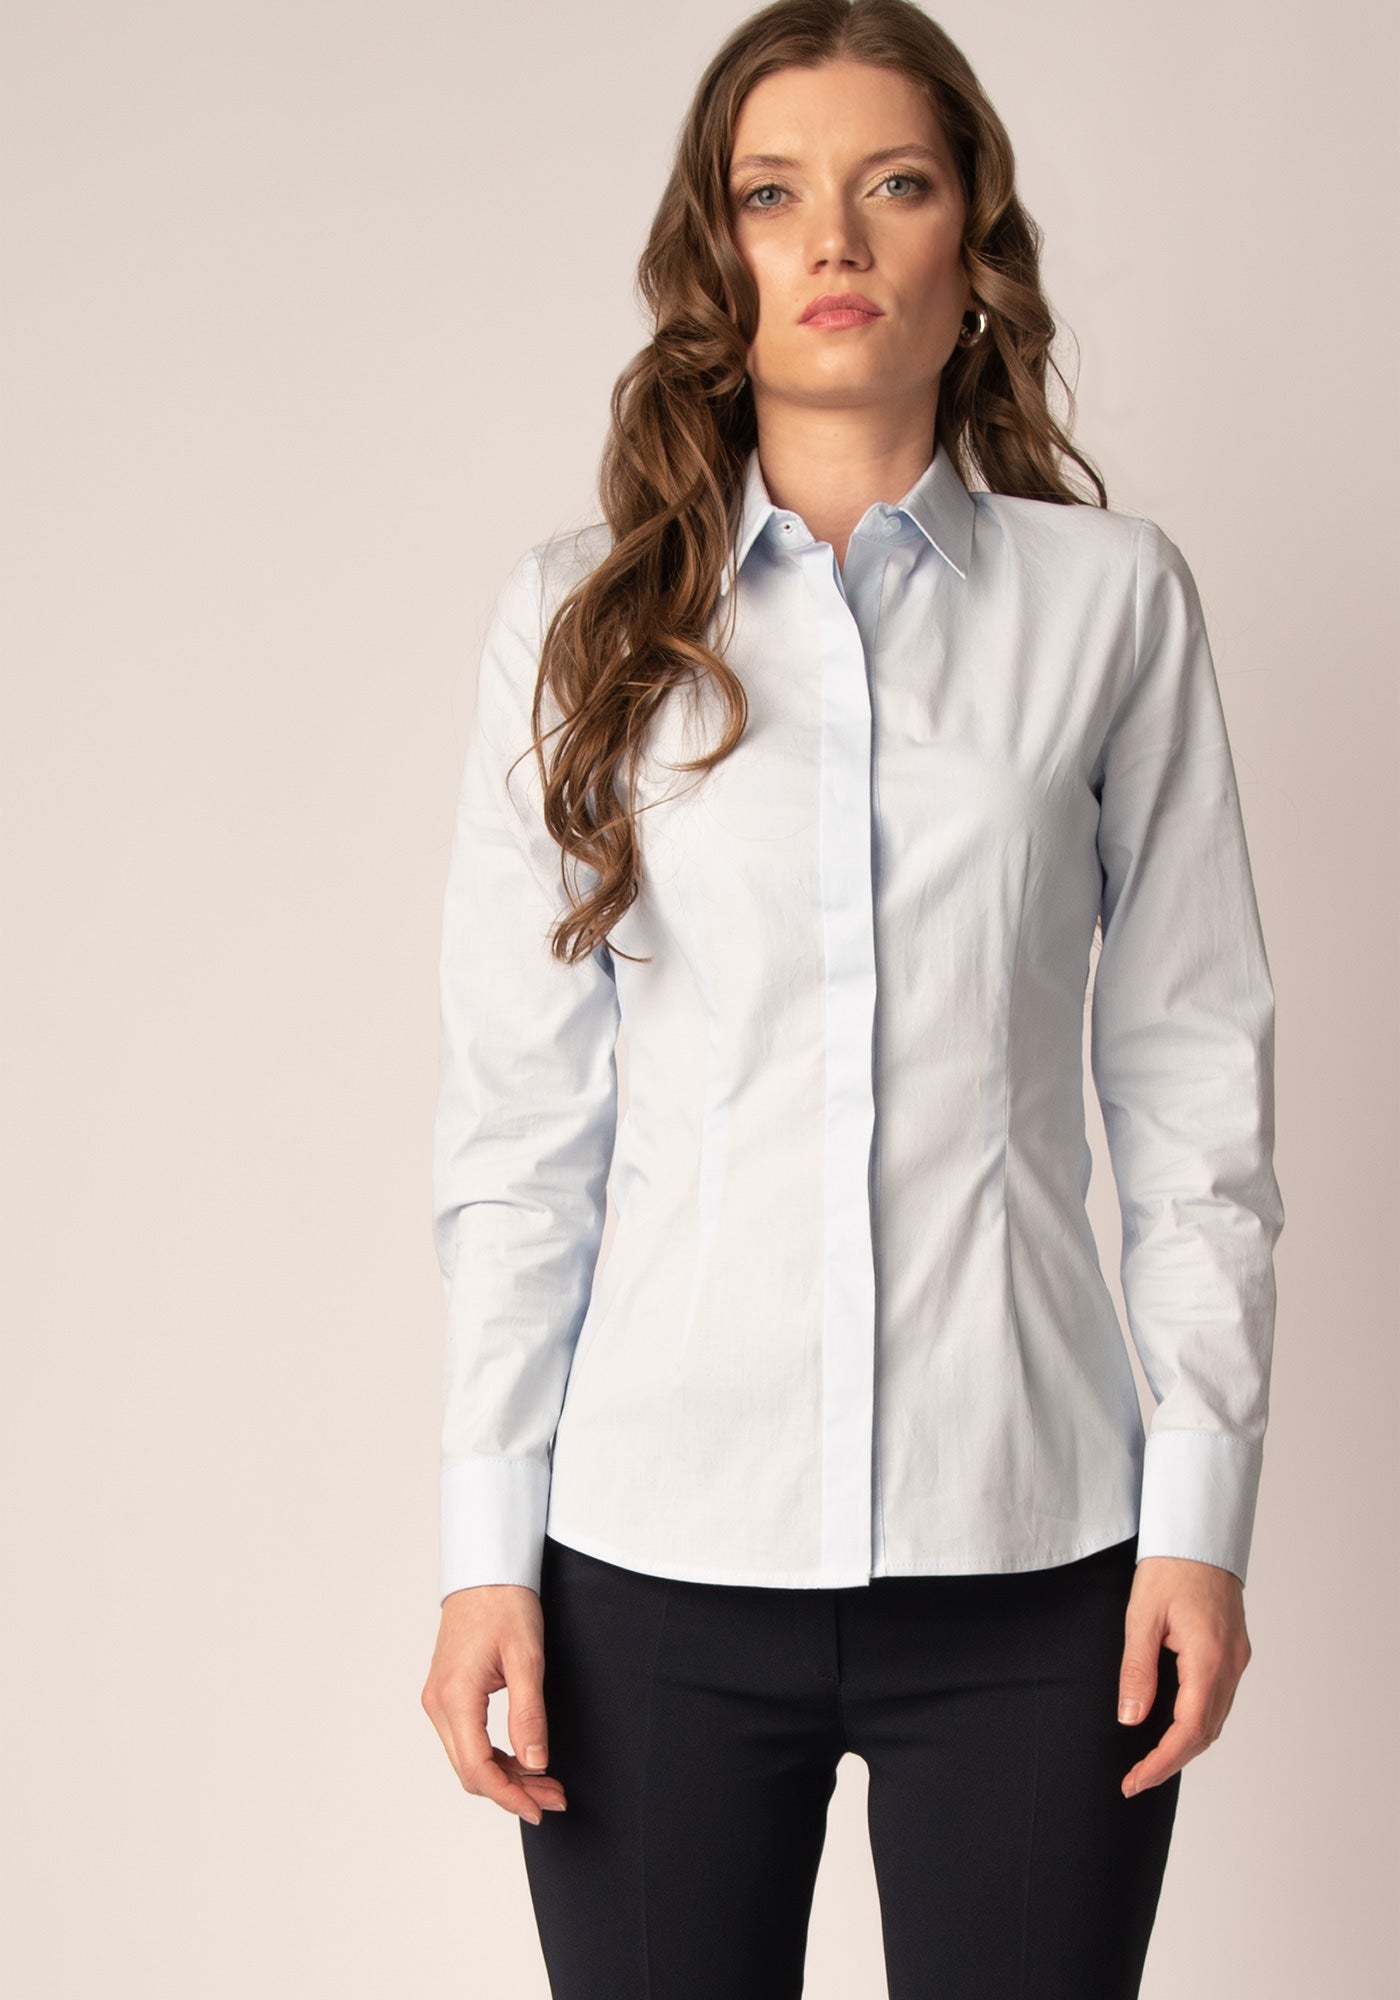 Women's Tailored Cotton Poplin Button up Shirt in Serenity blue